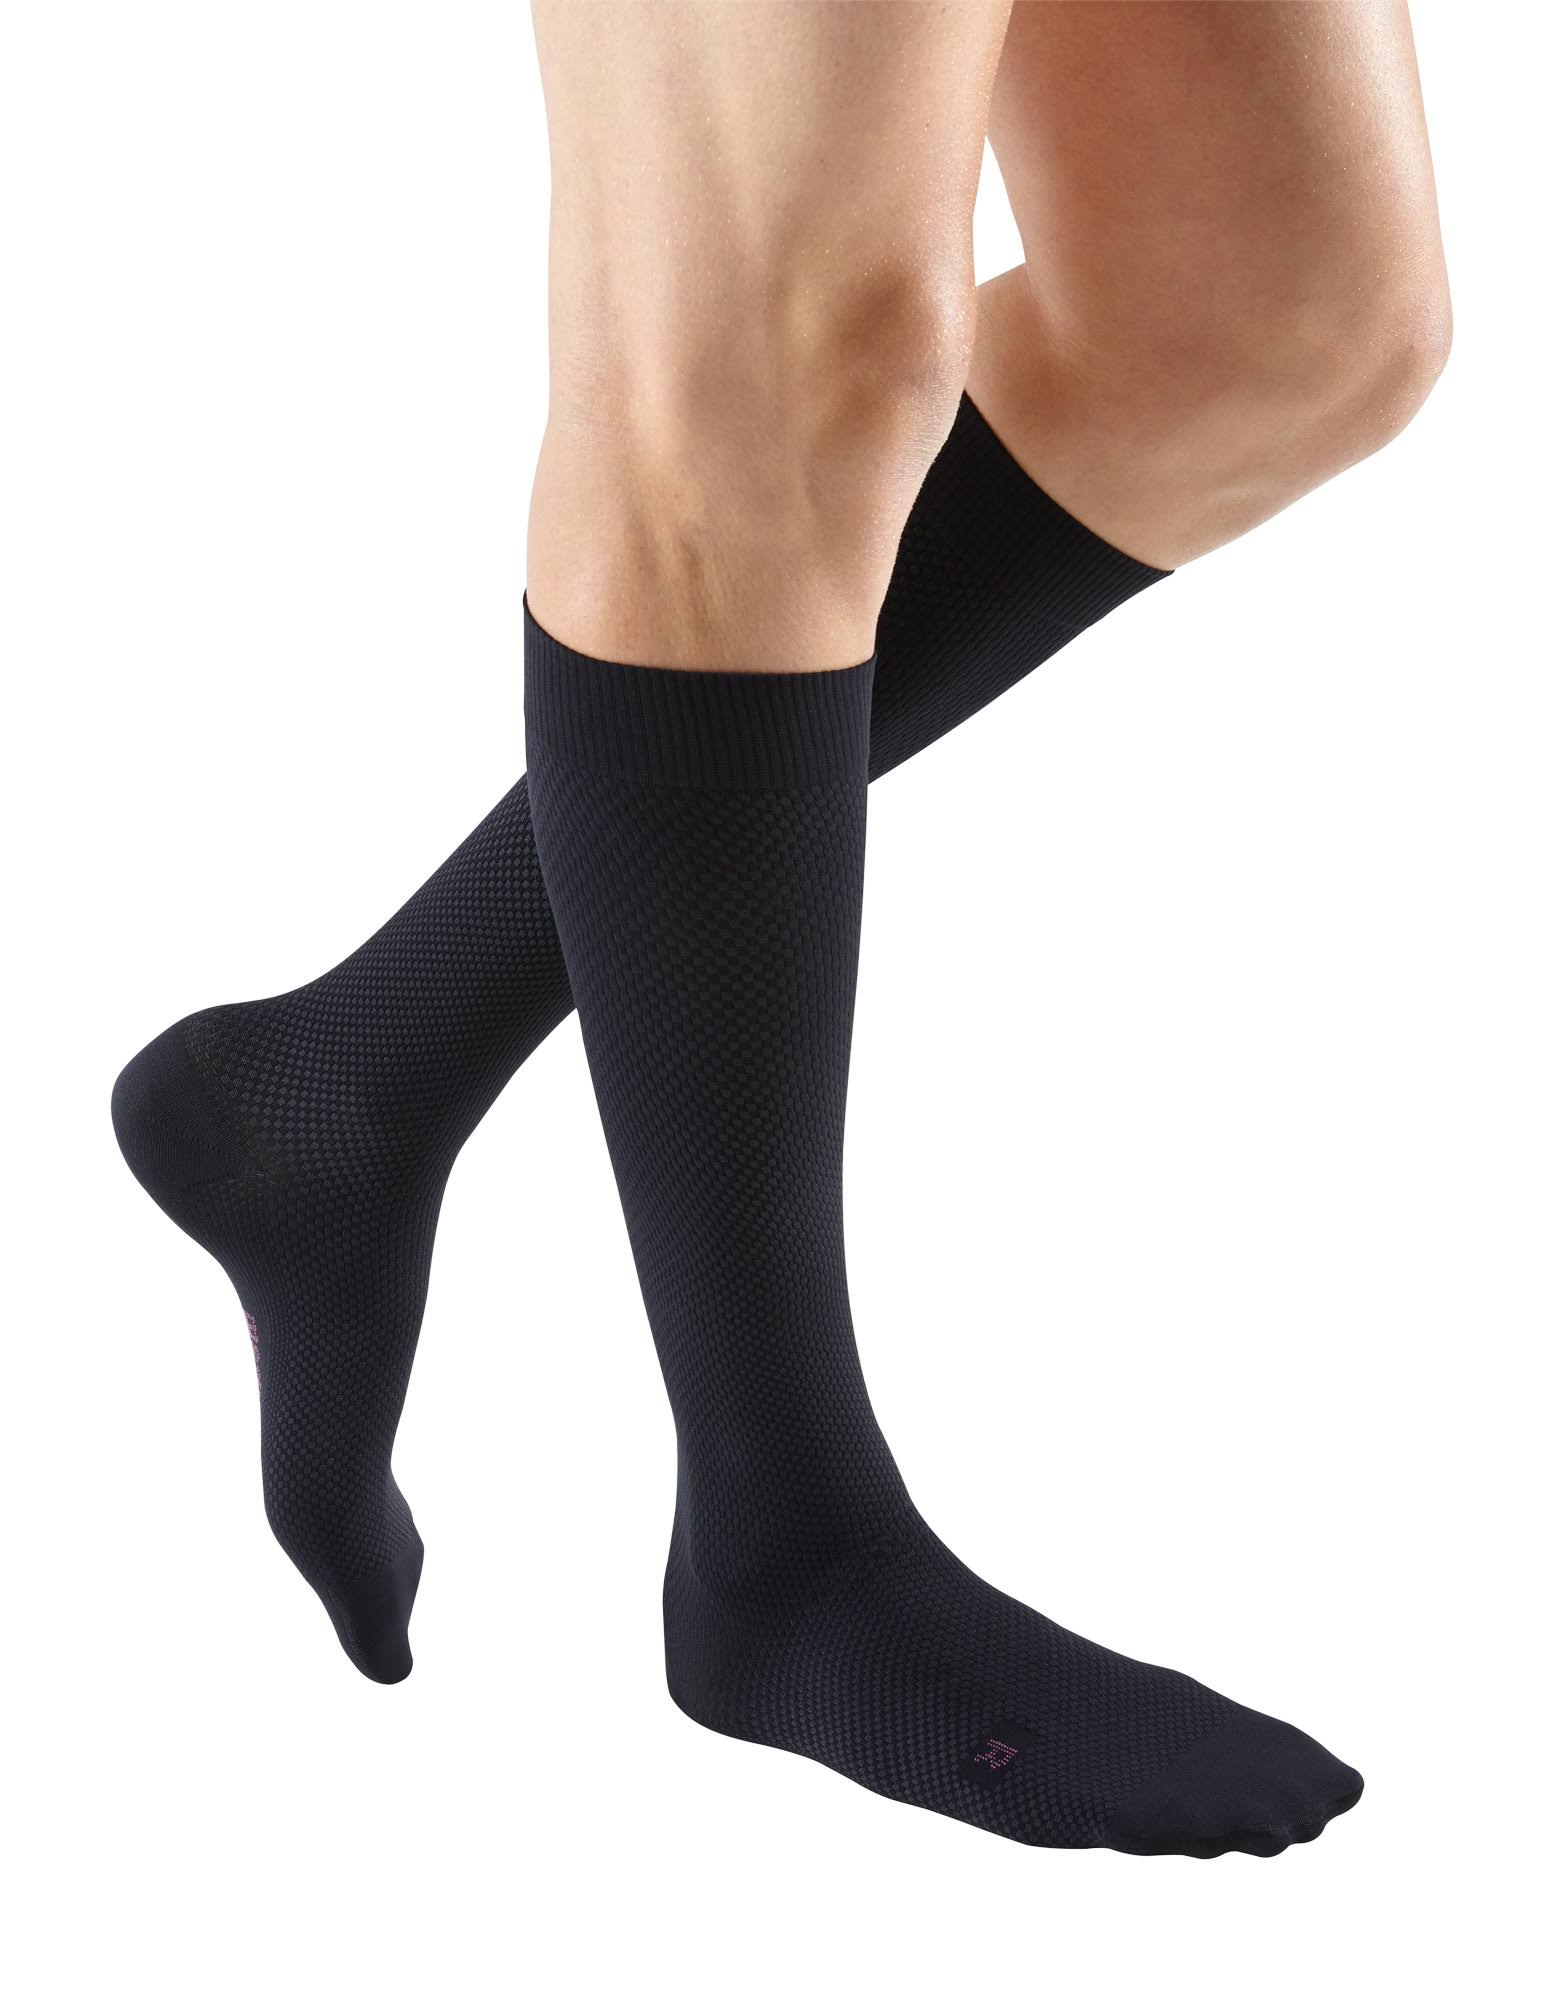 Mediven Men's Select 20 30 Closed Toe Compression Socks - Size 4, Black